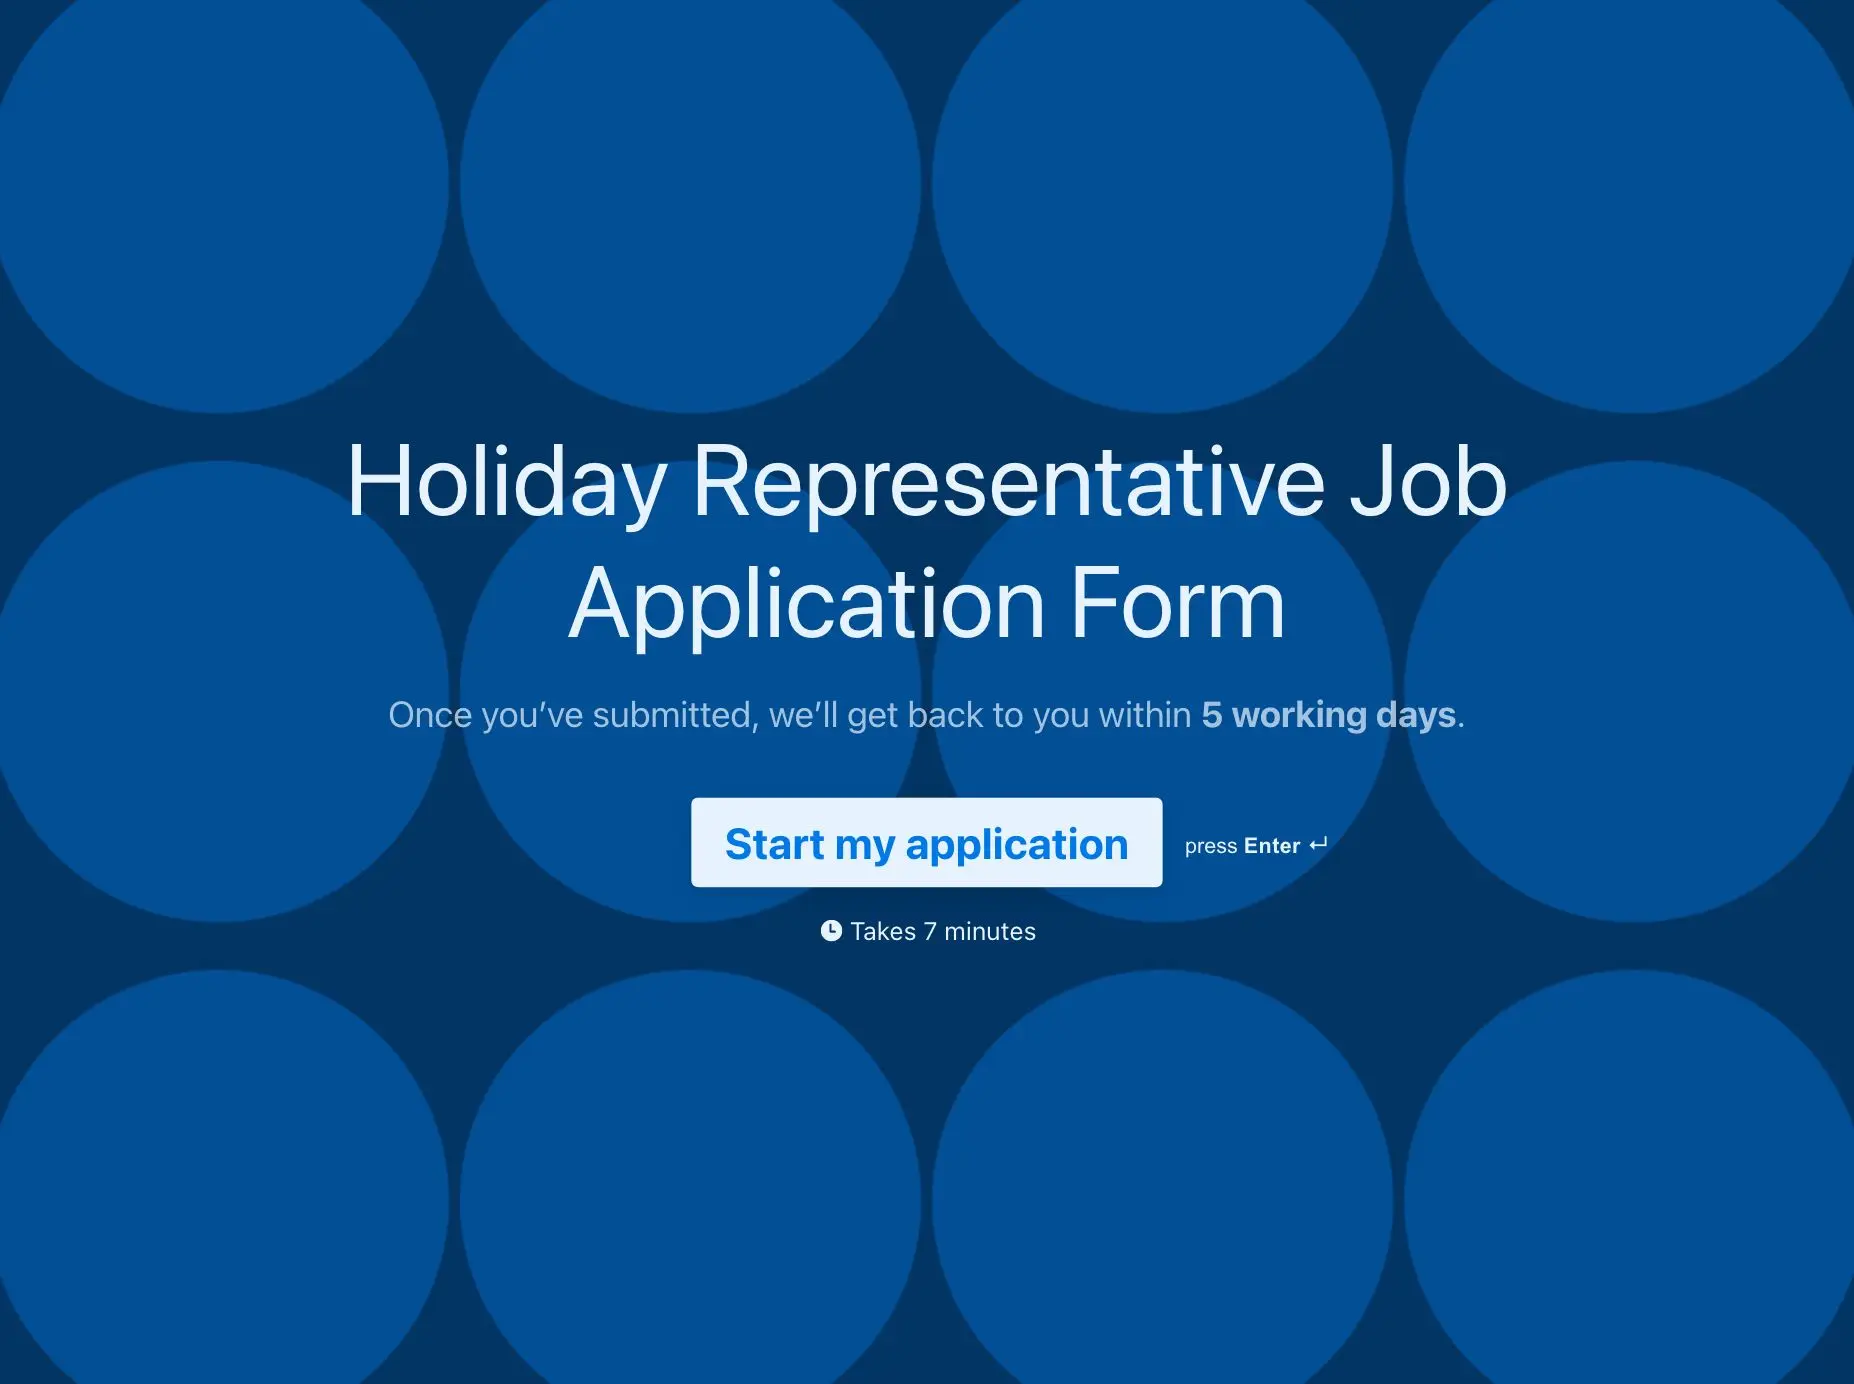 Holiday Representative Job Application Form Template Hero